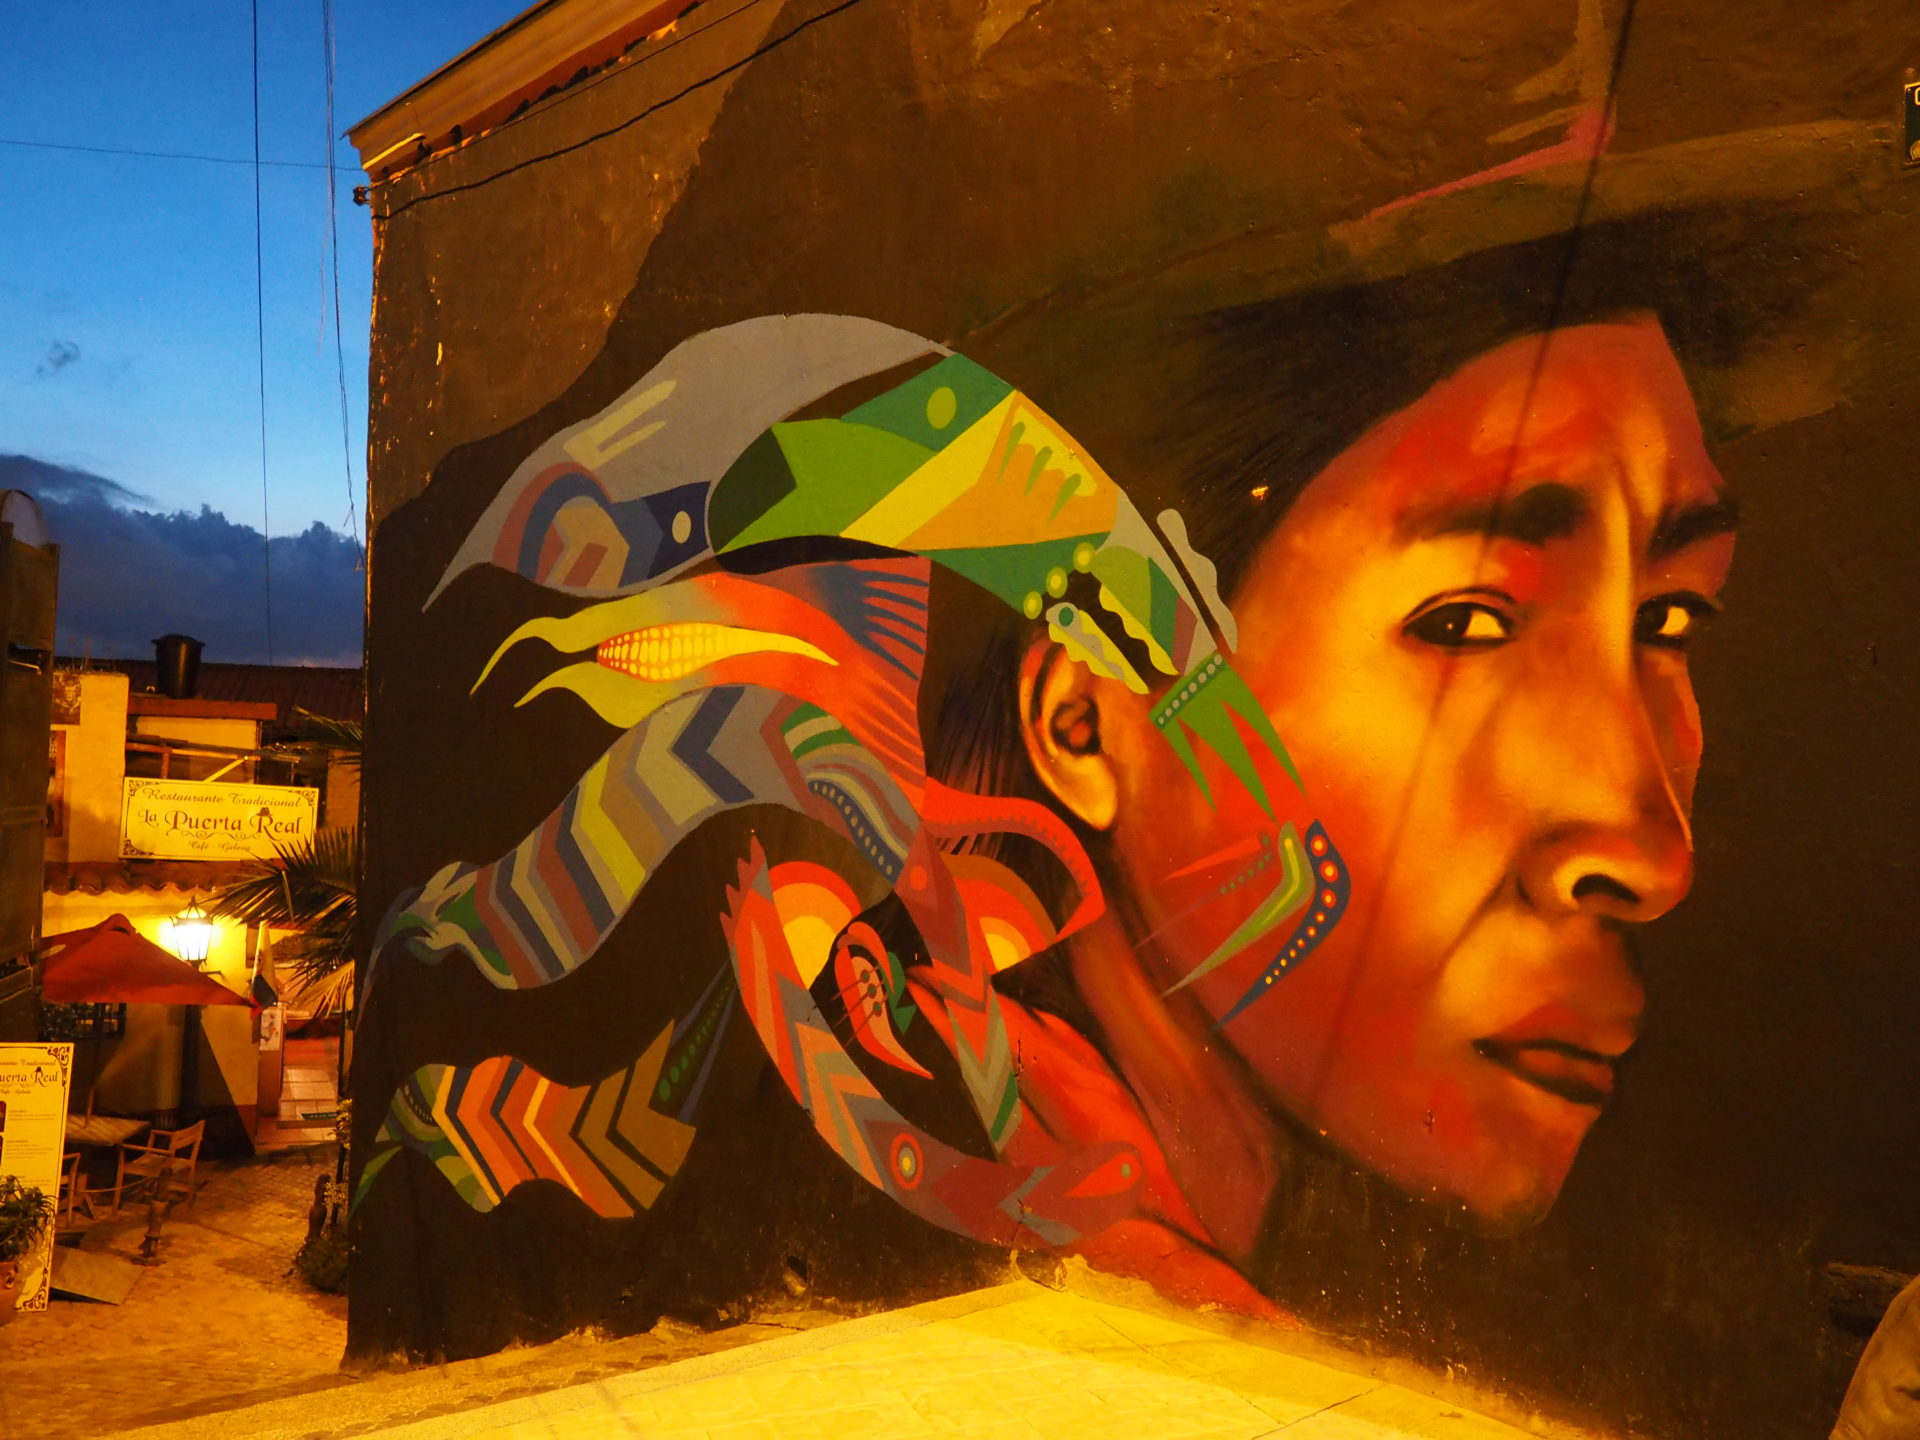 Guache, Colombia, 2017  Street art graffiti, Street art, Street artists